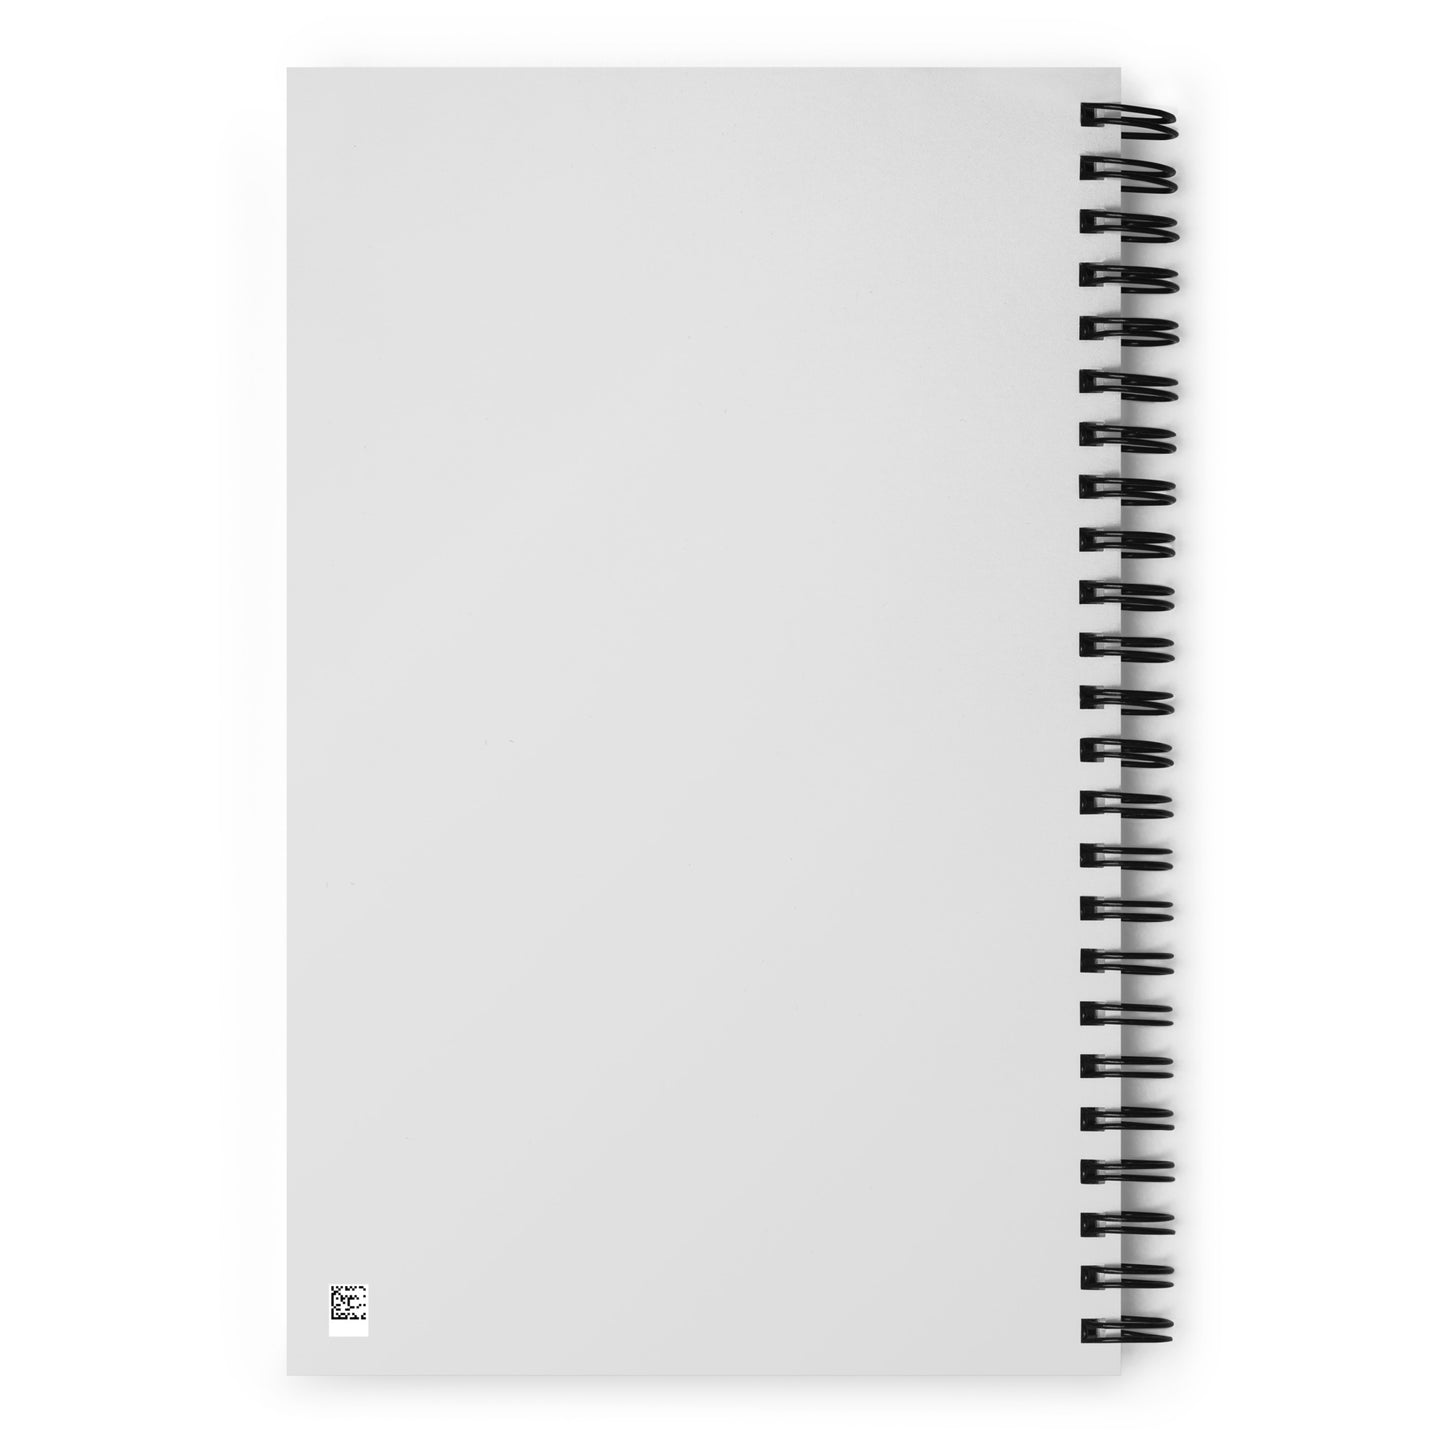 Love Chibis® Bear Buddies Spiral Notebook 5.25″ × 8.25″ (13 × 21 cm)